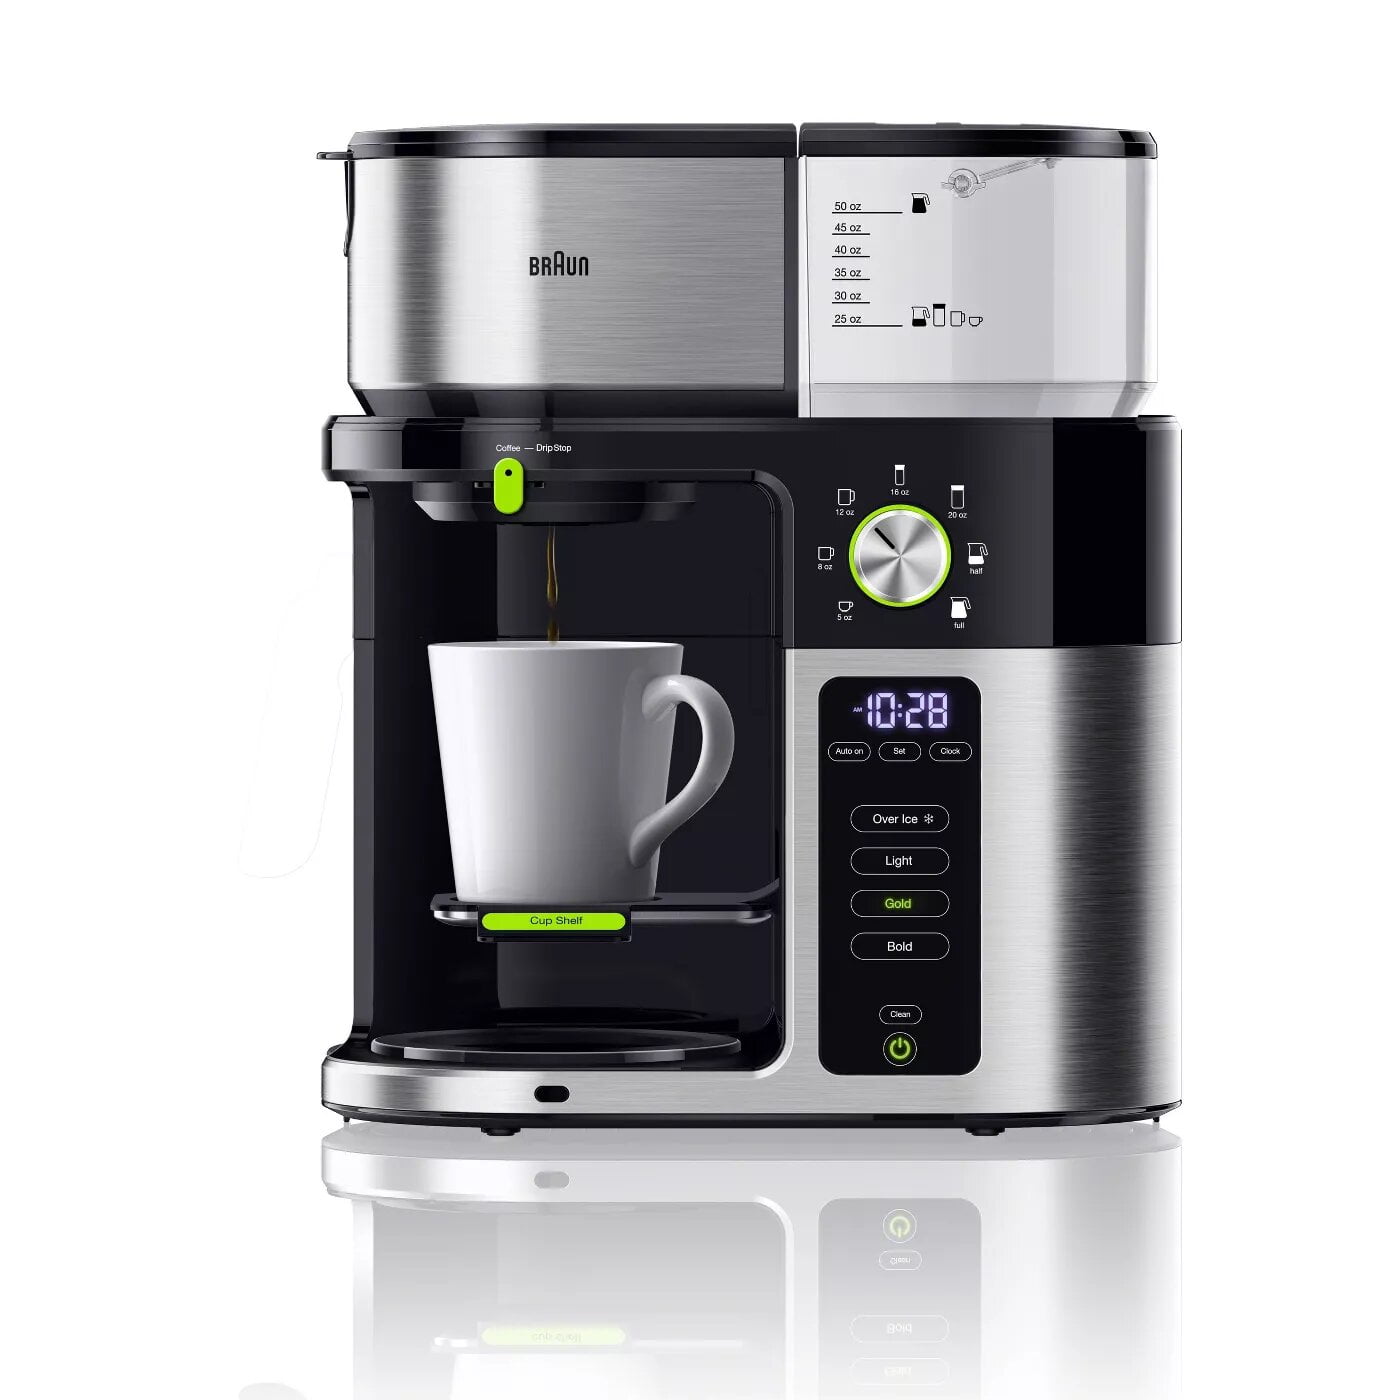 MultiServe Drip Coffee - Braun Black KF9050 Maker,